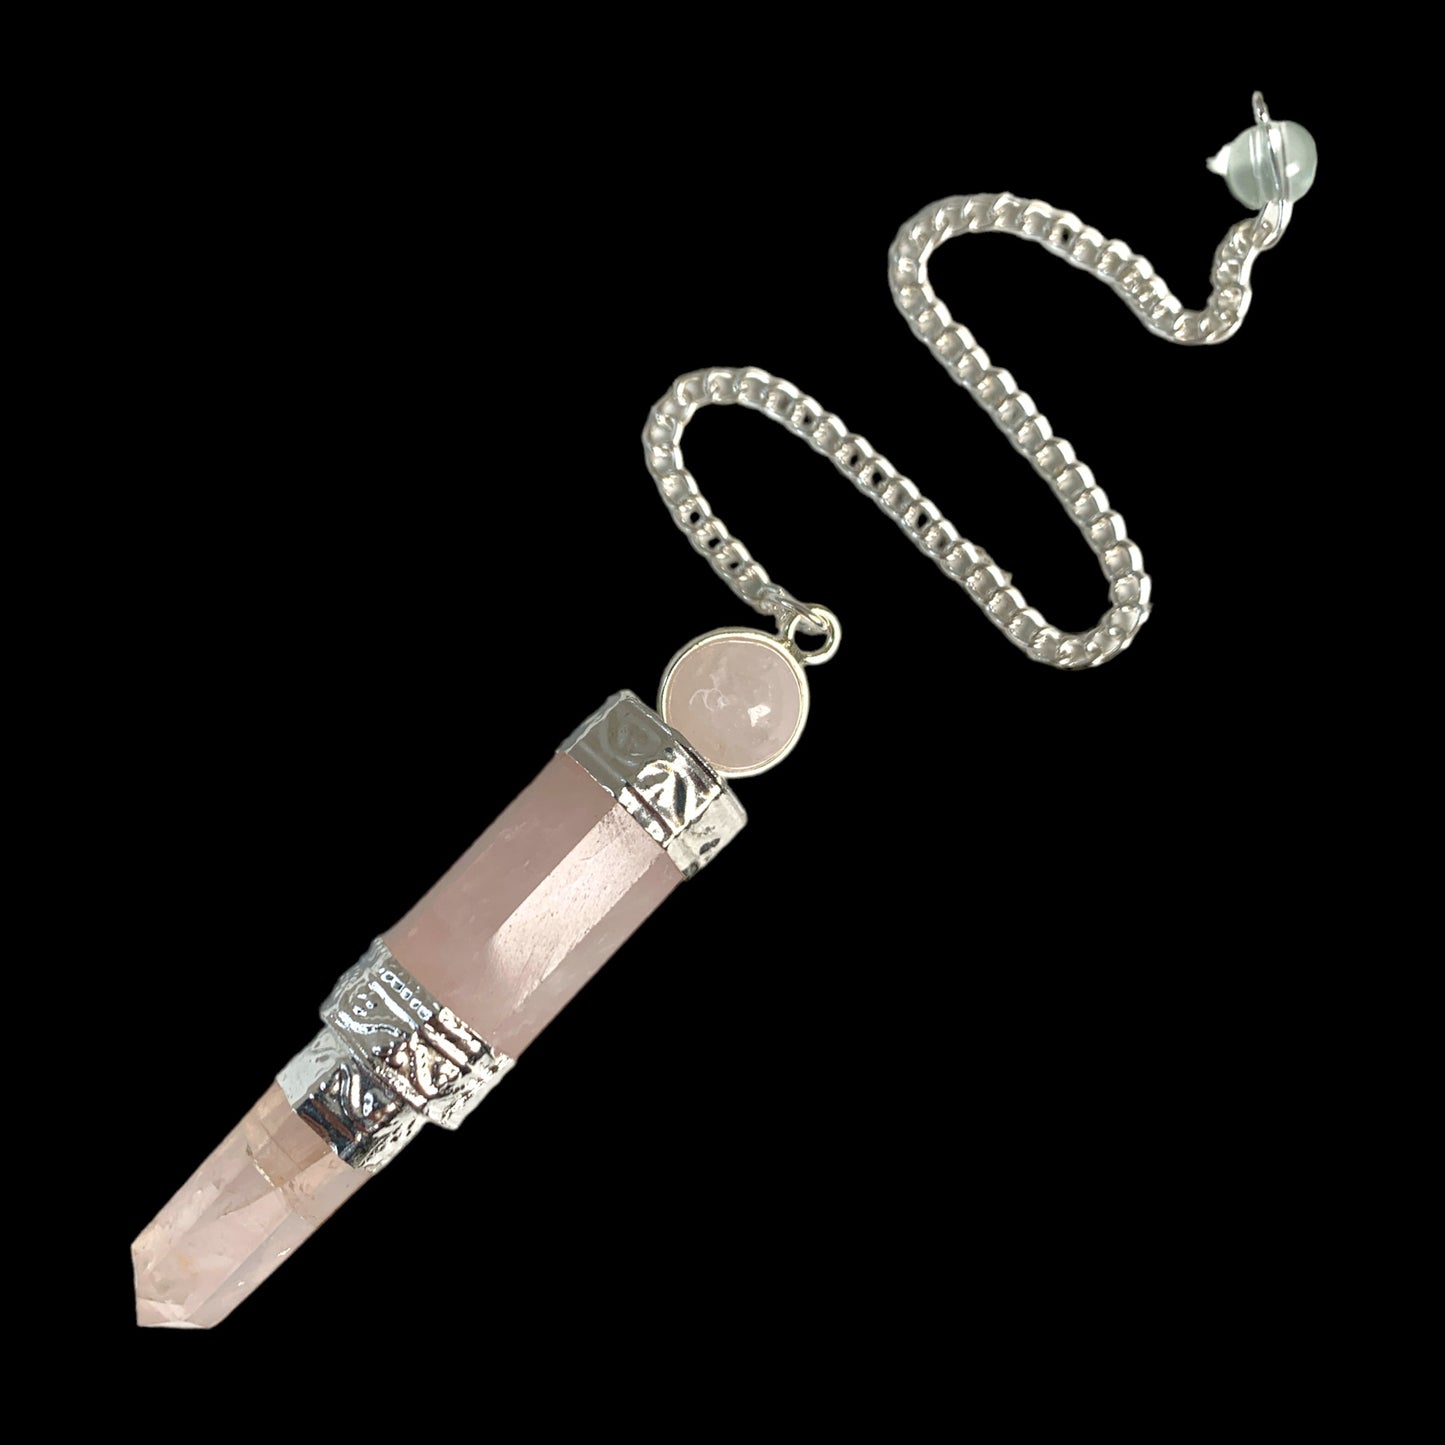 Rose Quartz 3pc Small Wand Pendulum with Chain - 40-50mm - 25g - NEW422